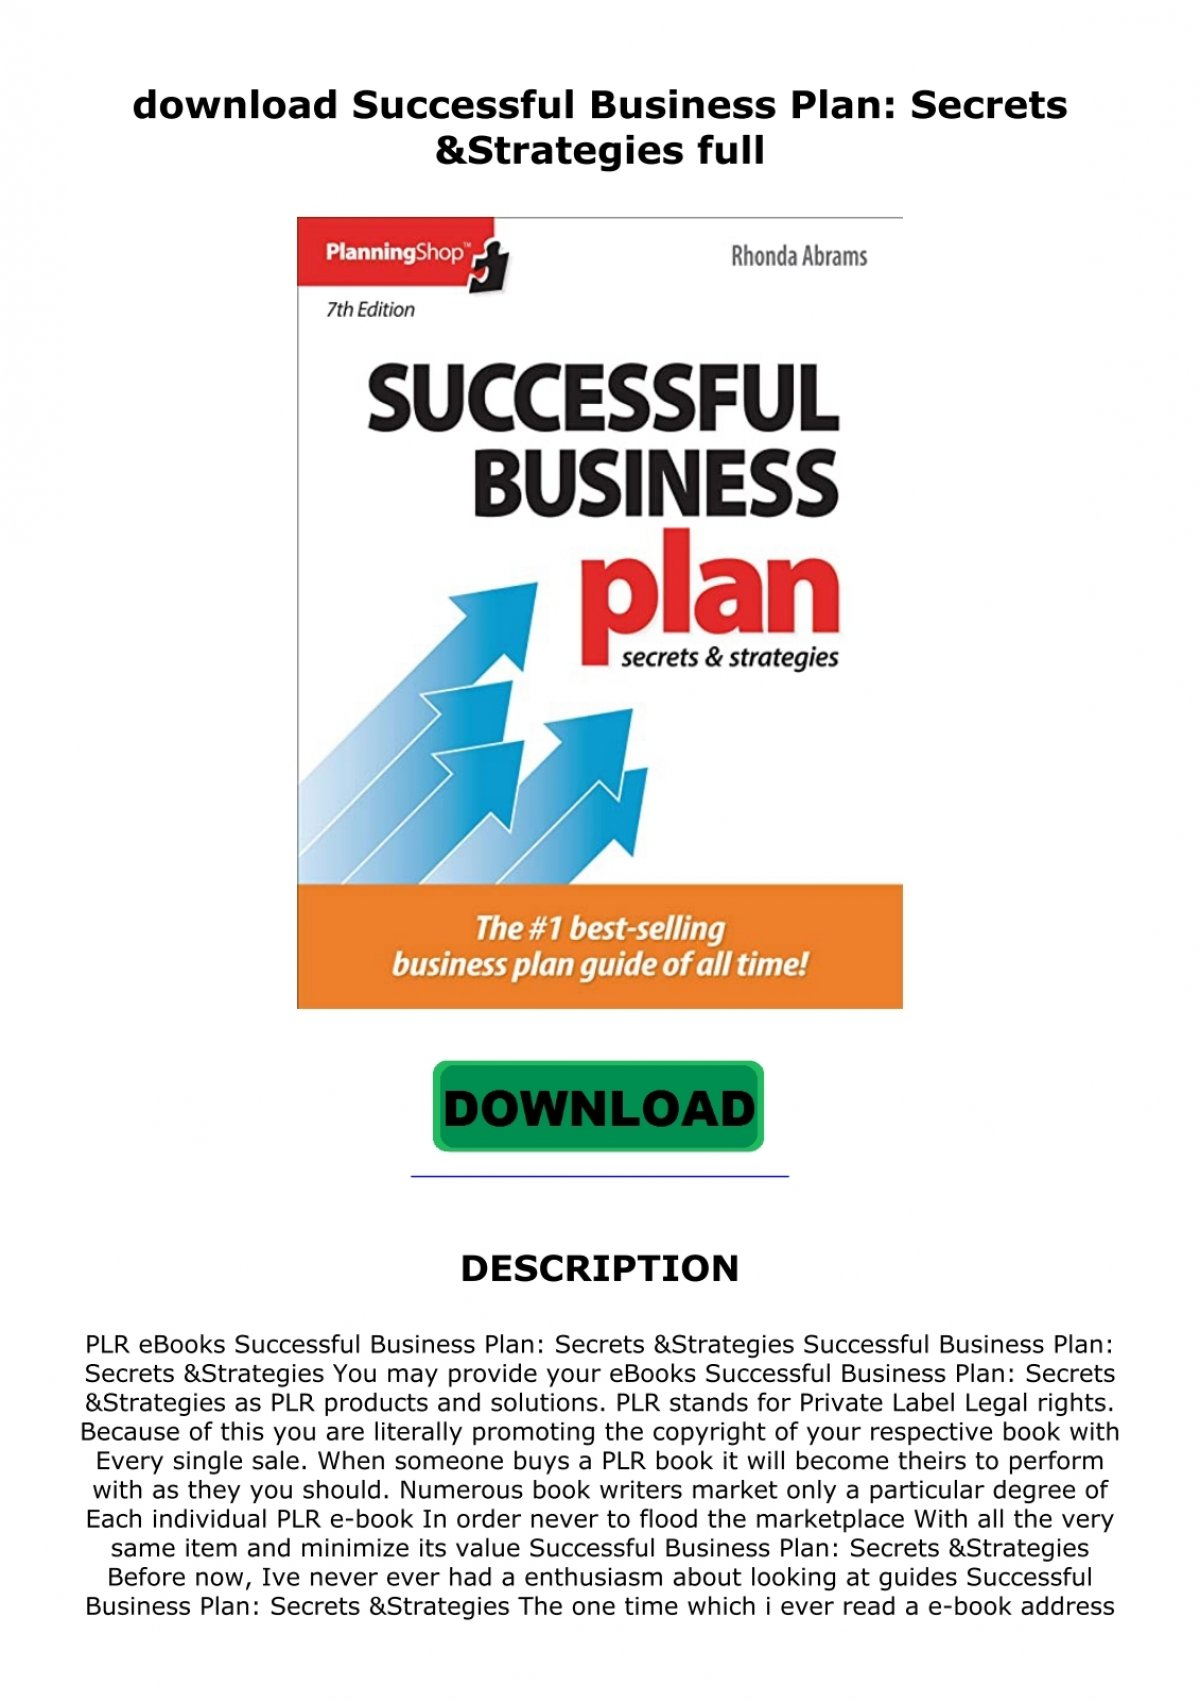 successful business plan secrets & strategies pdf free download